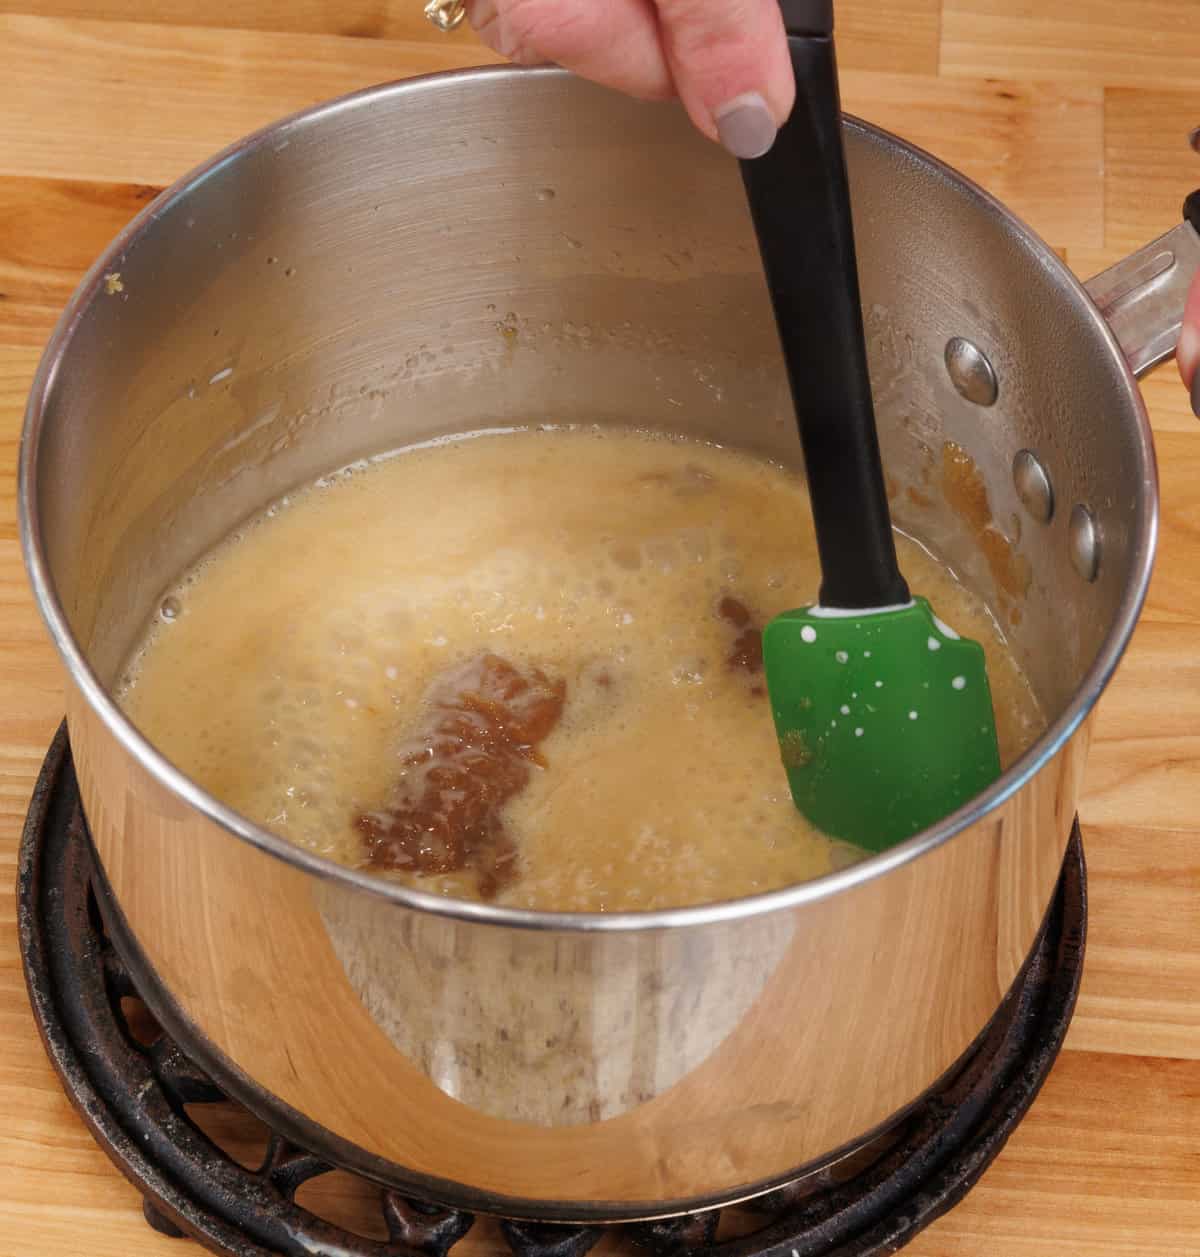 sugar seizing in a saucepan when cold cream is added